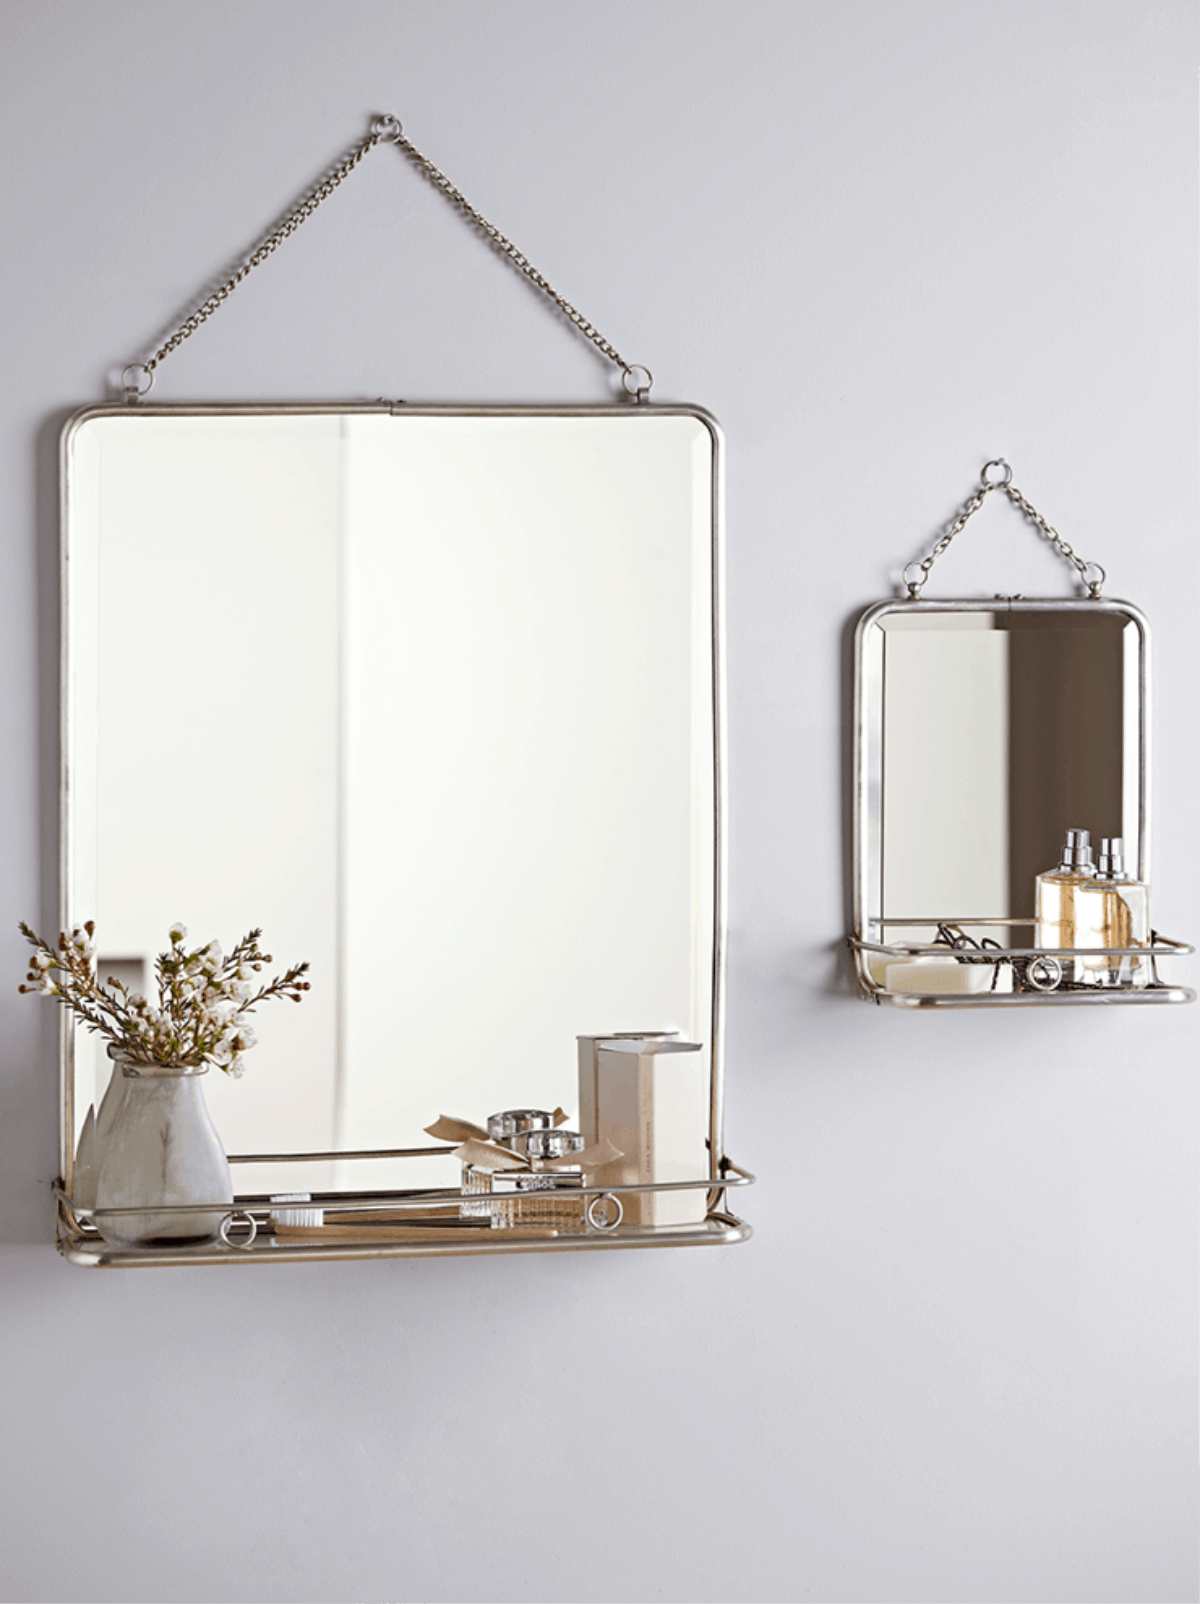 Using A Bathroom Mirror to create light